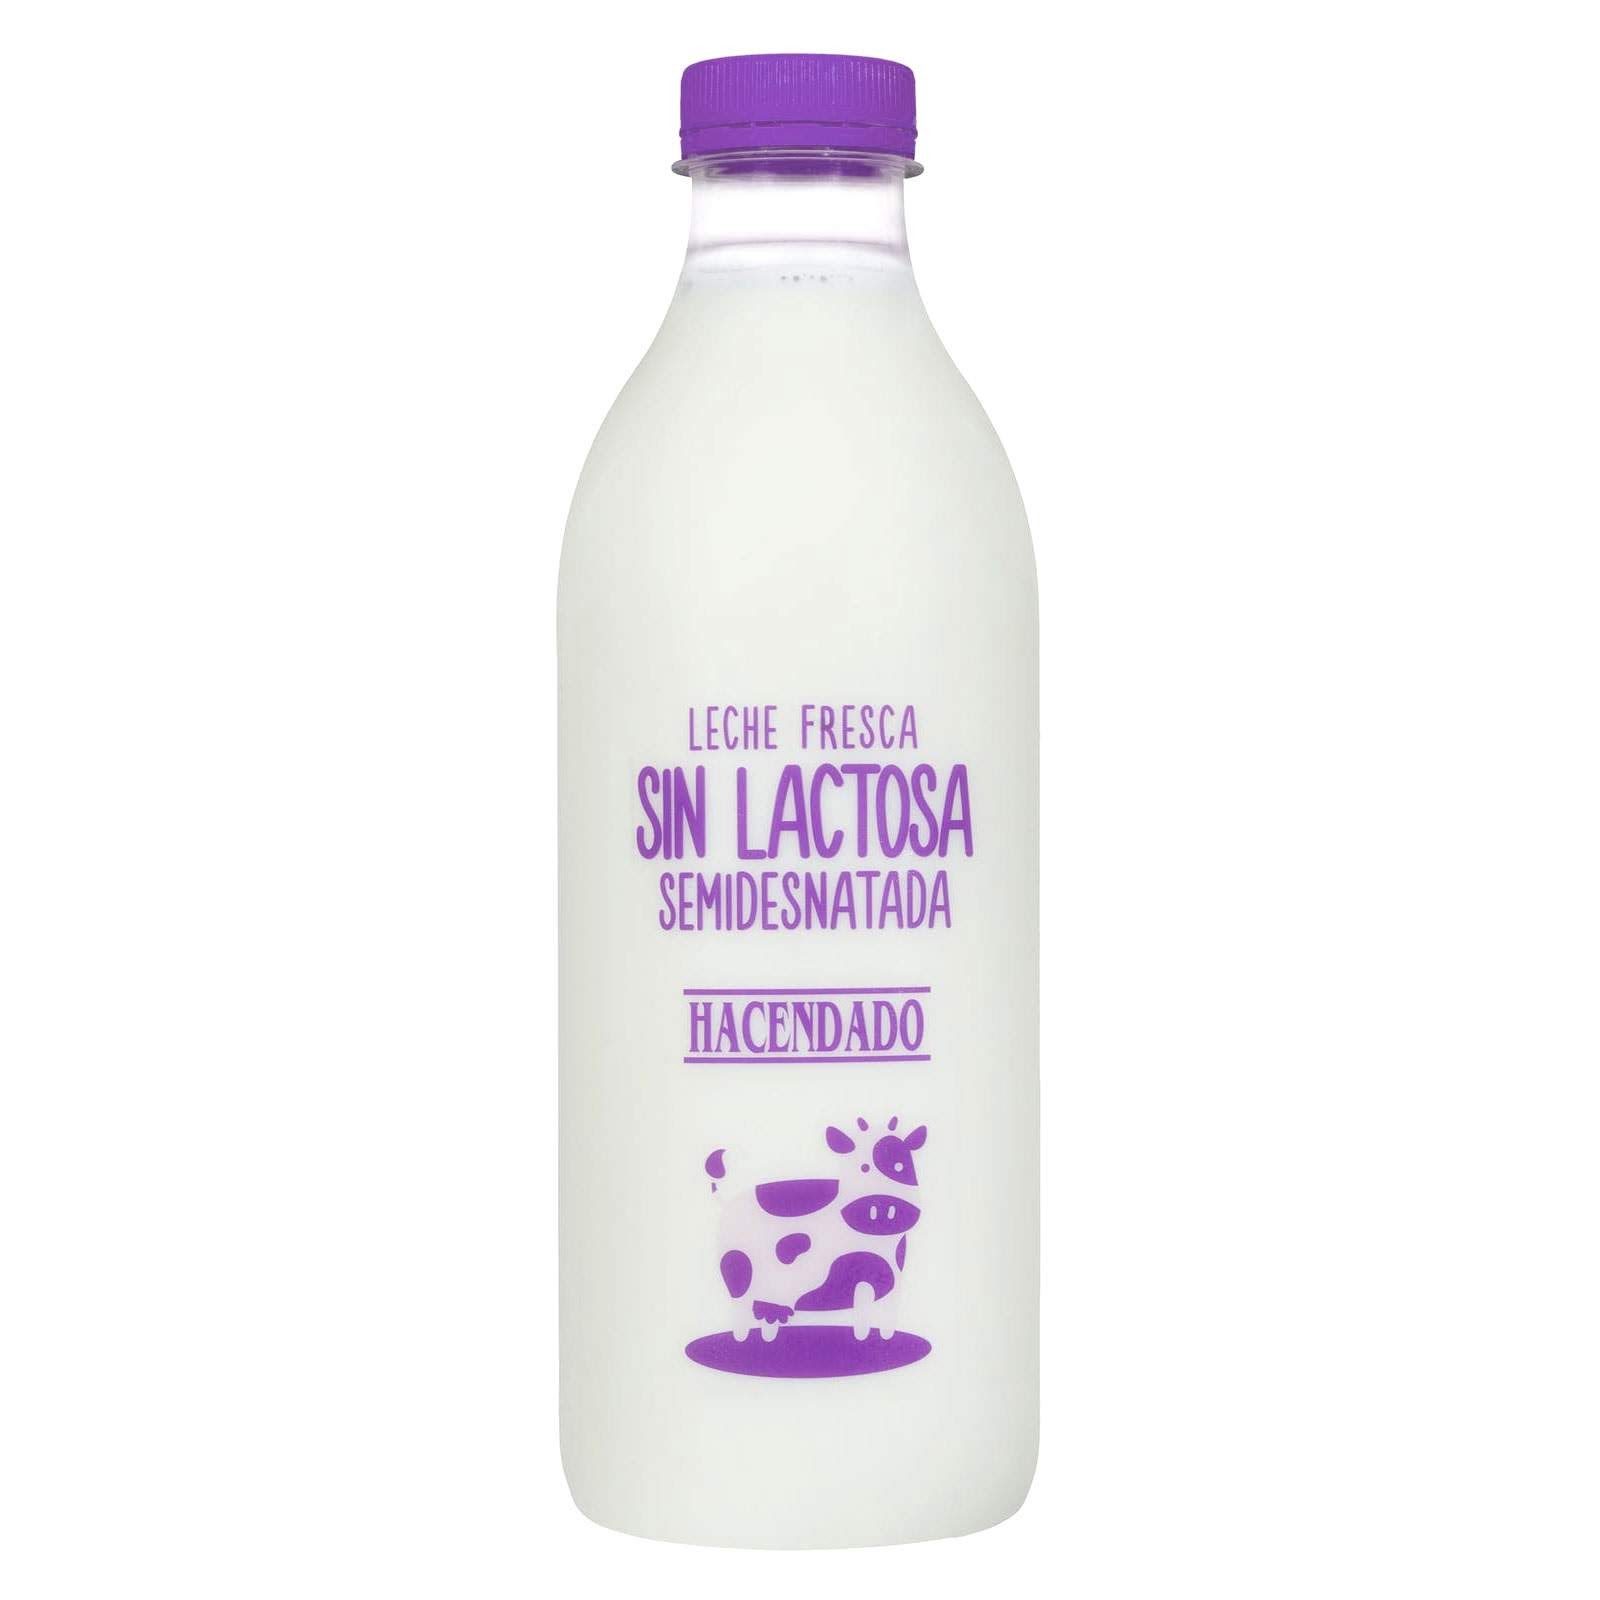 leche-fresca-sin-lactosa-semidesnatada-hacendado-mercadona-1-3334320